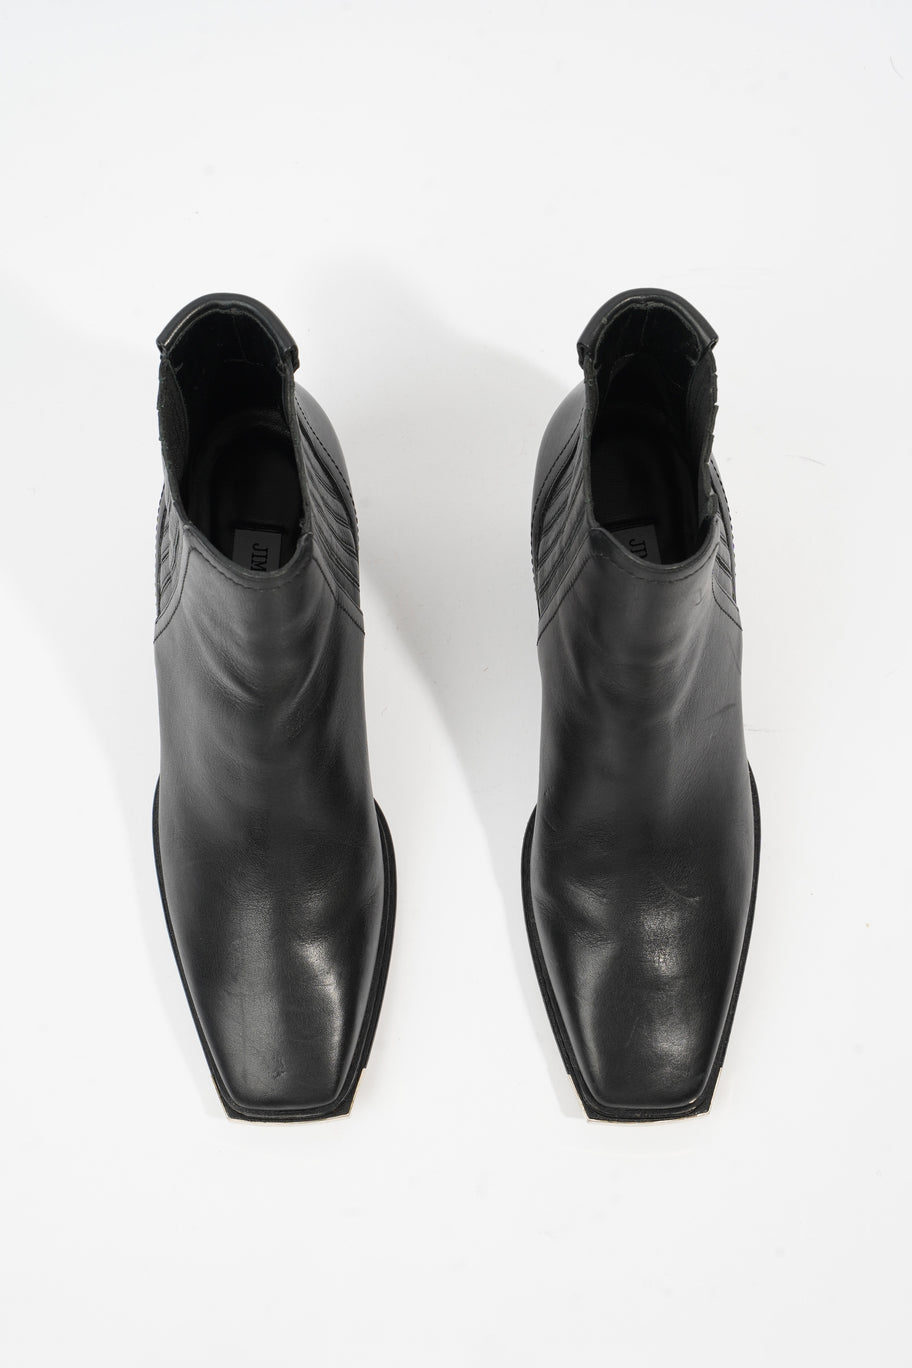 Square Toe Ankle Boots Black Leather EU 38 UK 5 Image 8